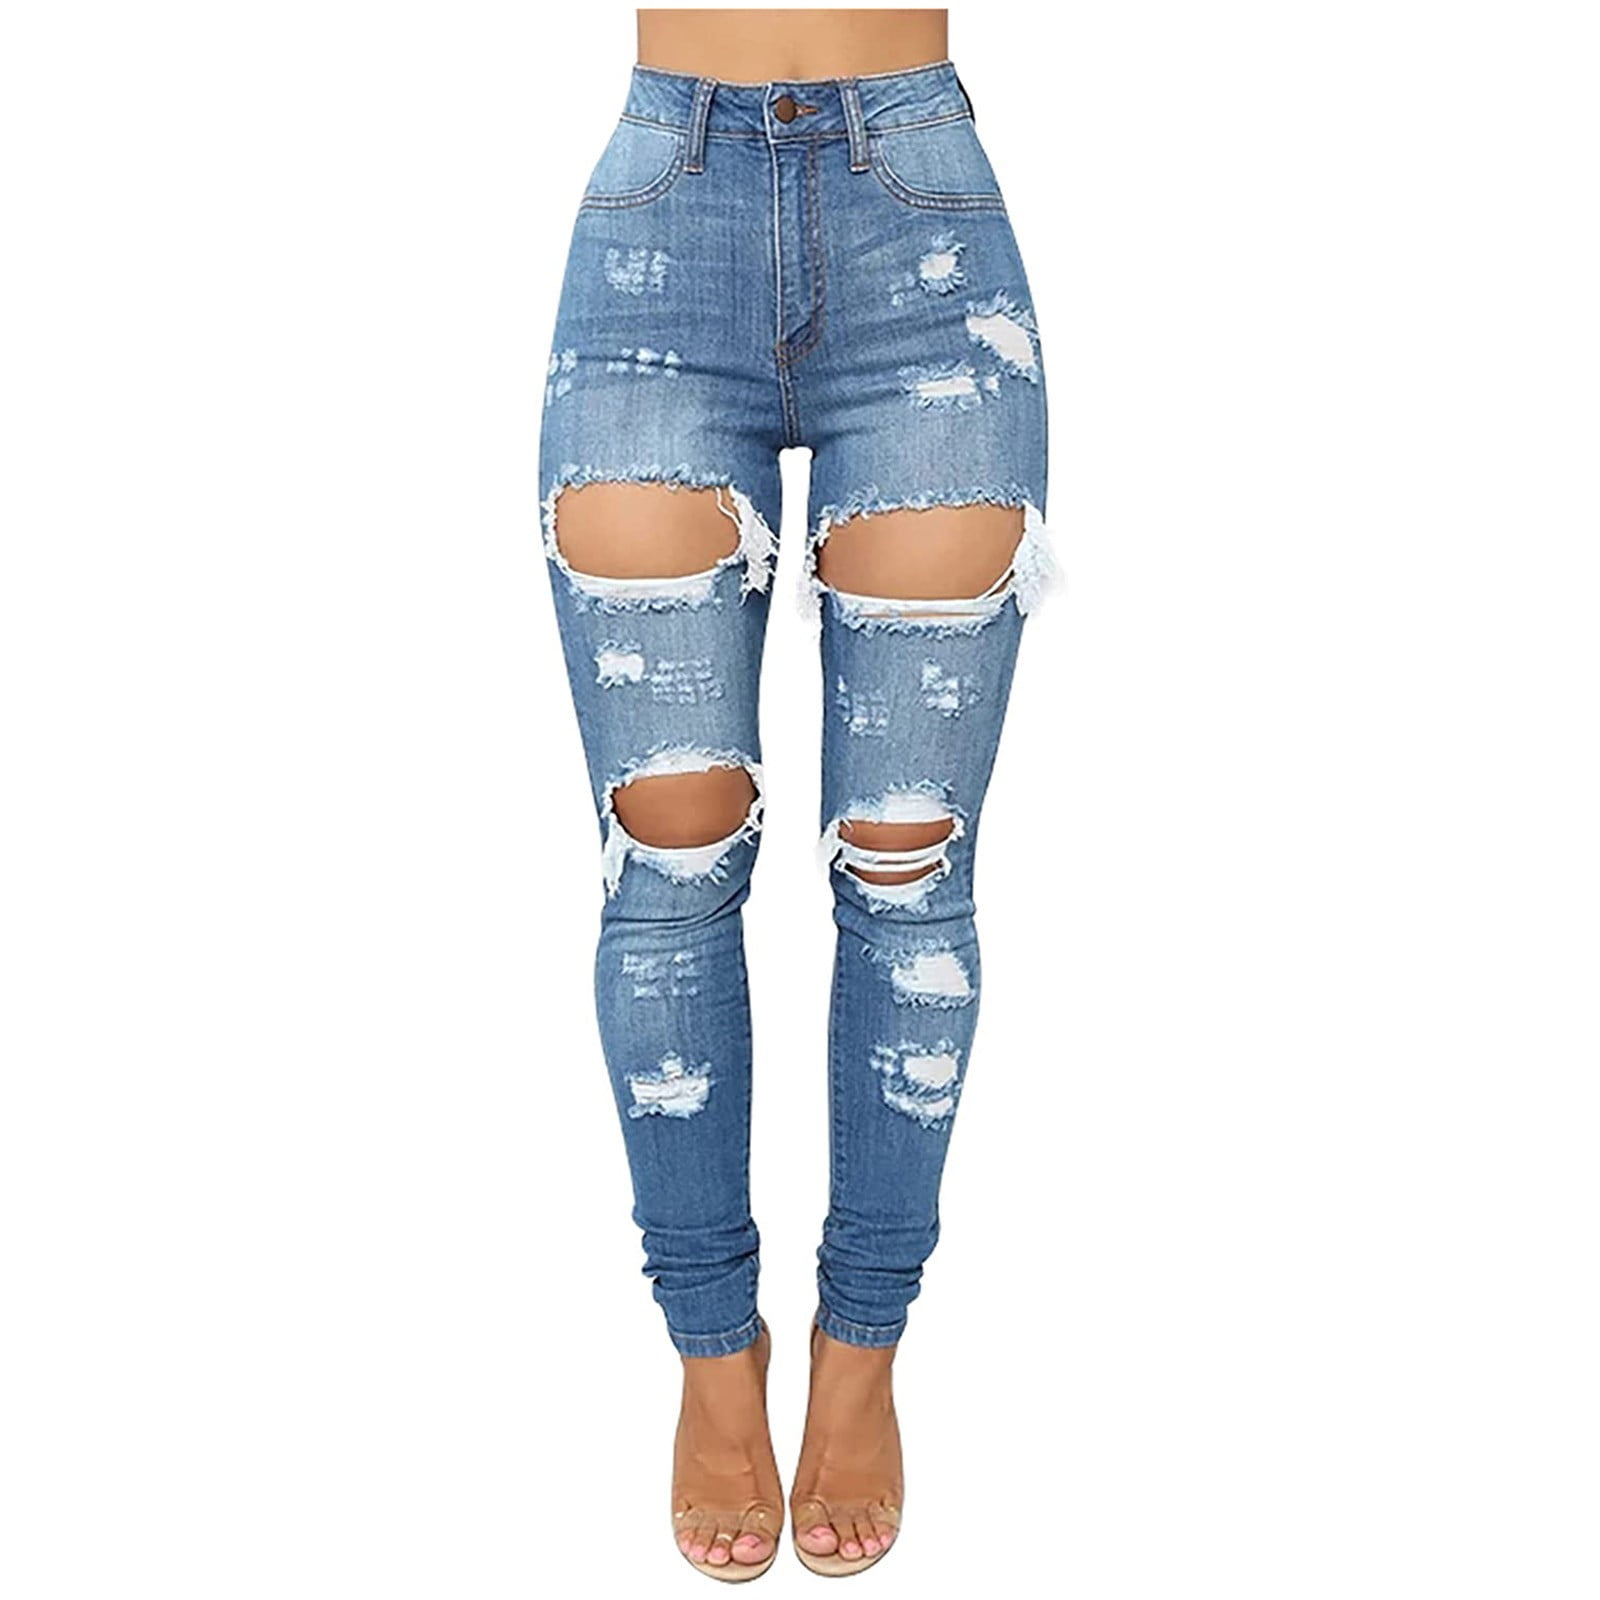 Stretchy Fabric Skinny Jeans - Dark Blue - Just $8